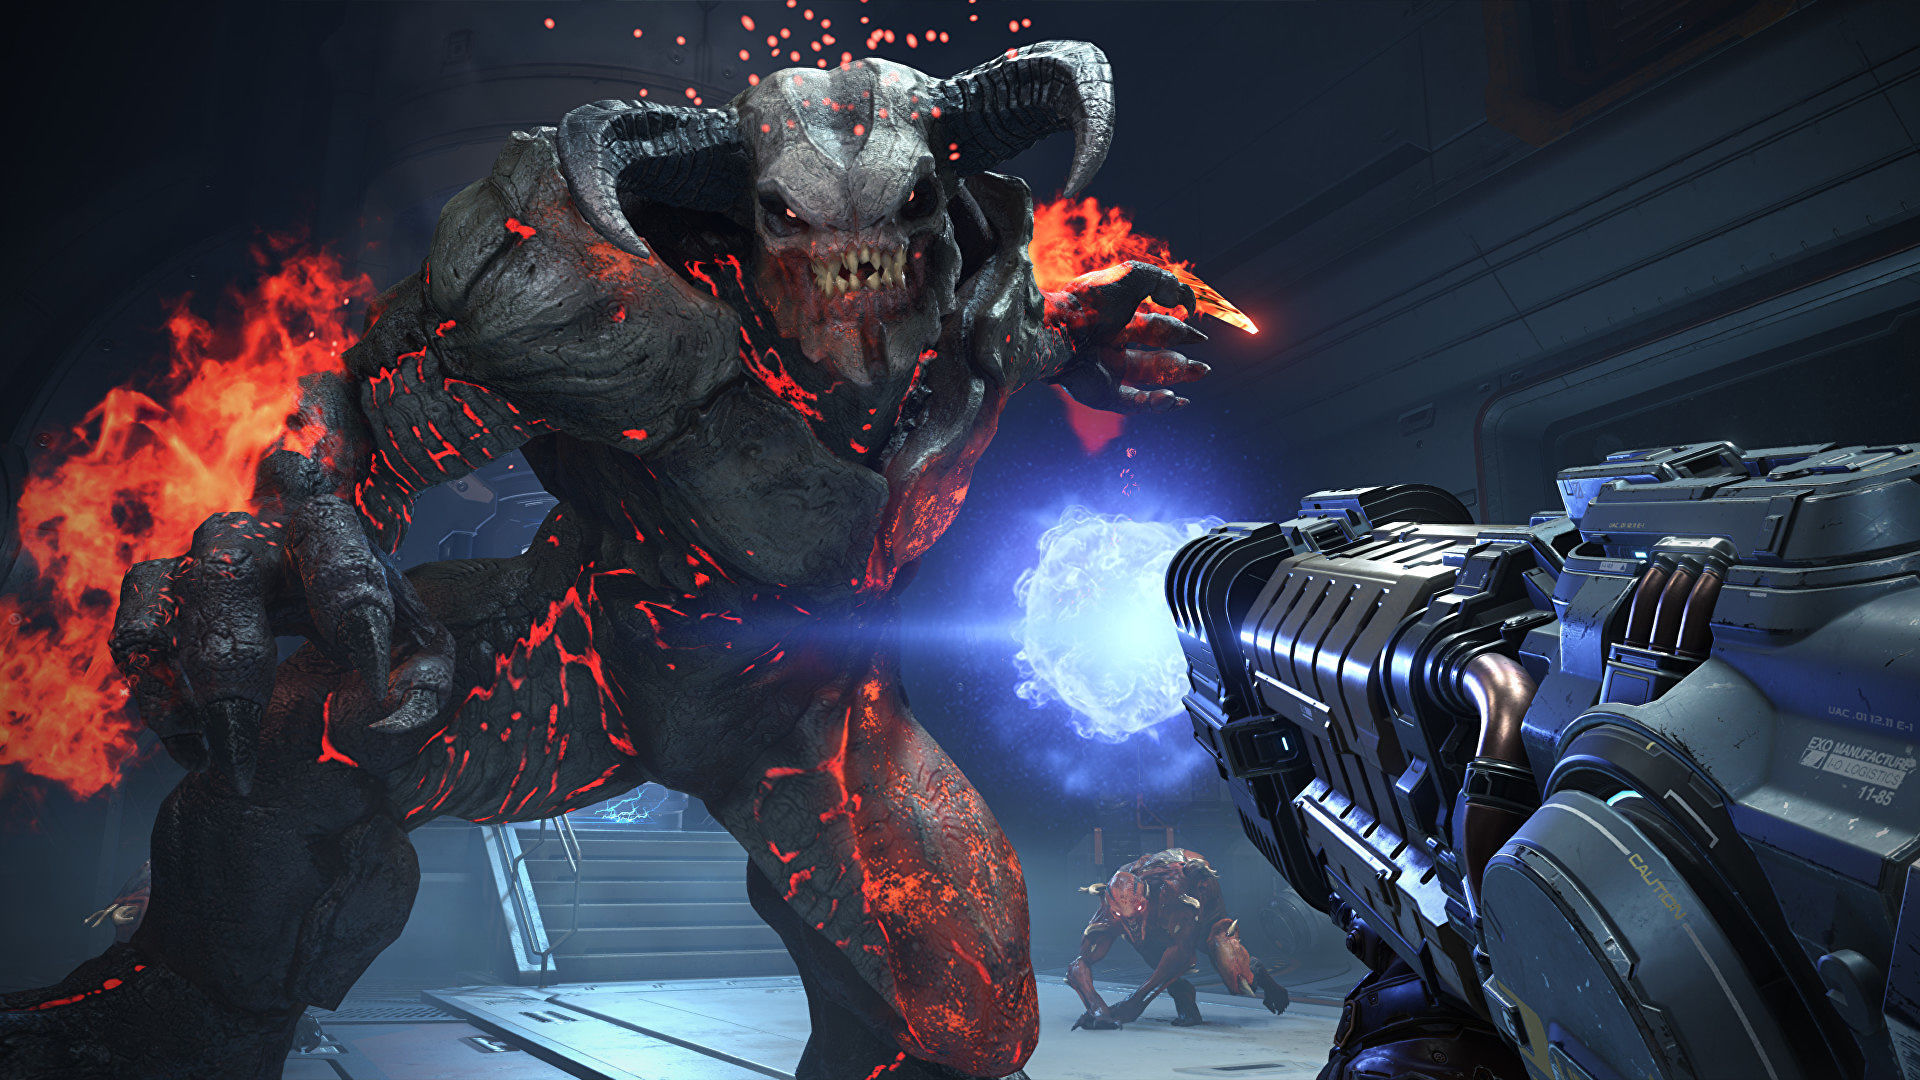 Doom Eternal's first update features Empowered demons and Battlemode tweaks. Rock Paper Shotgun